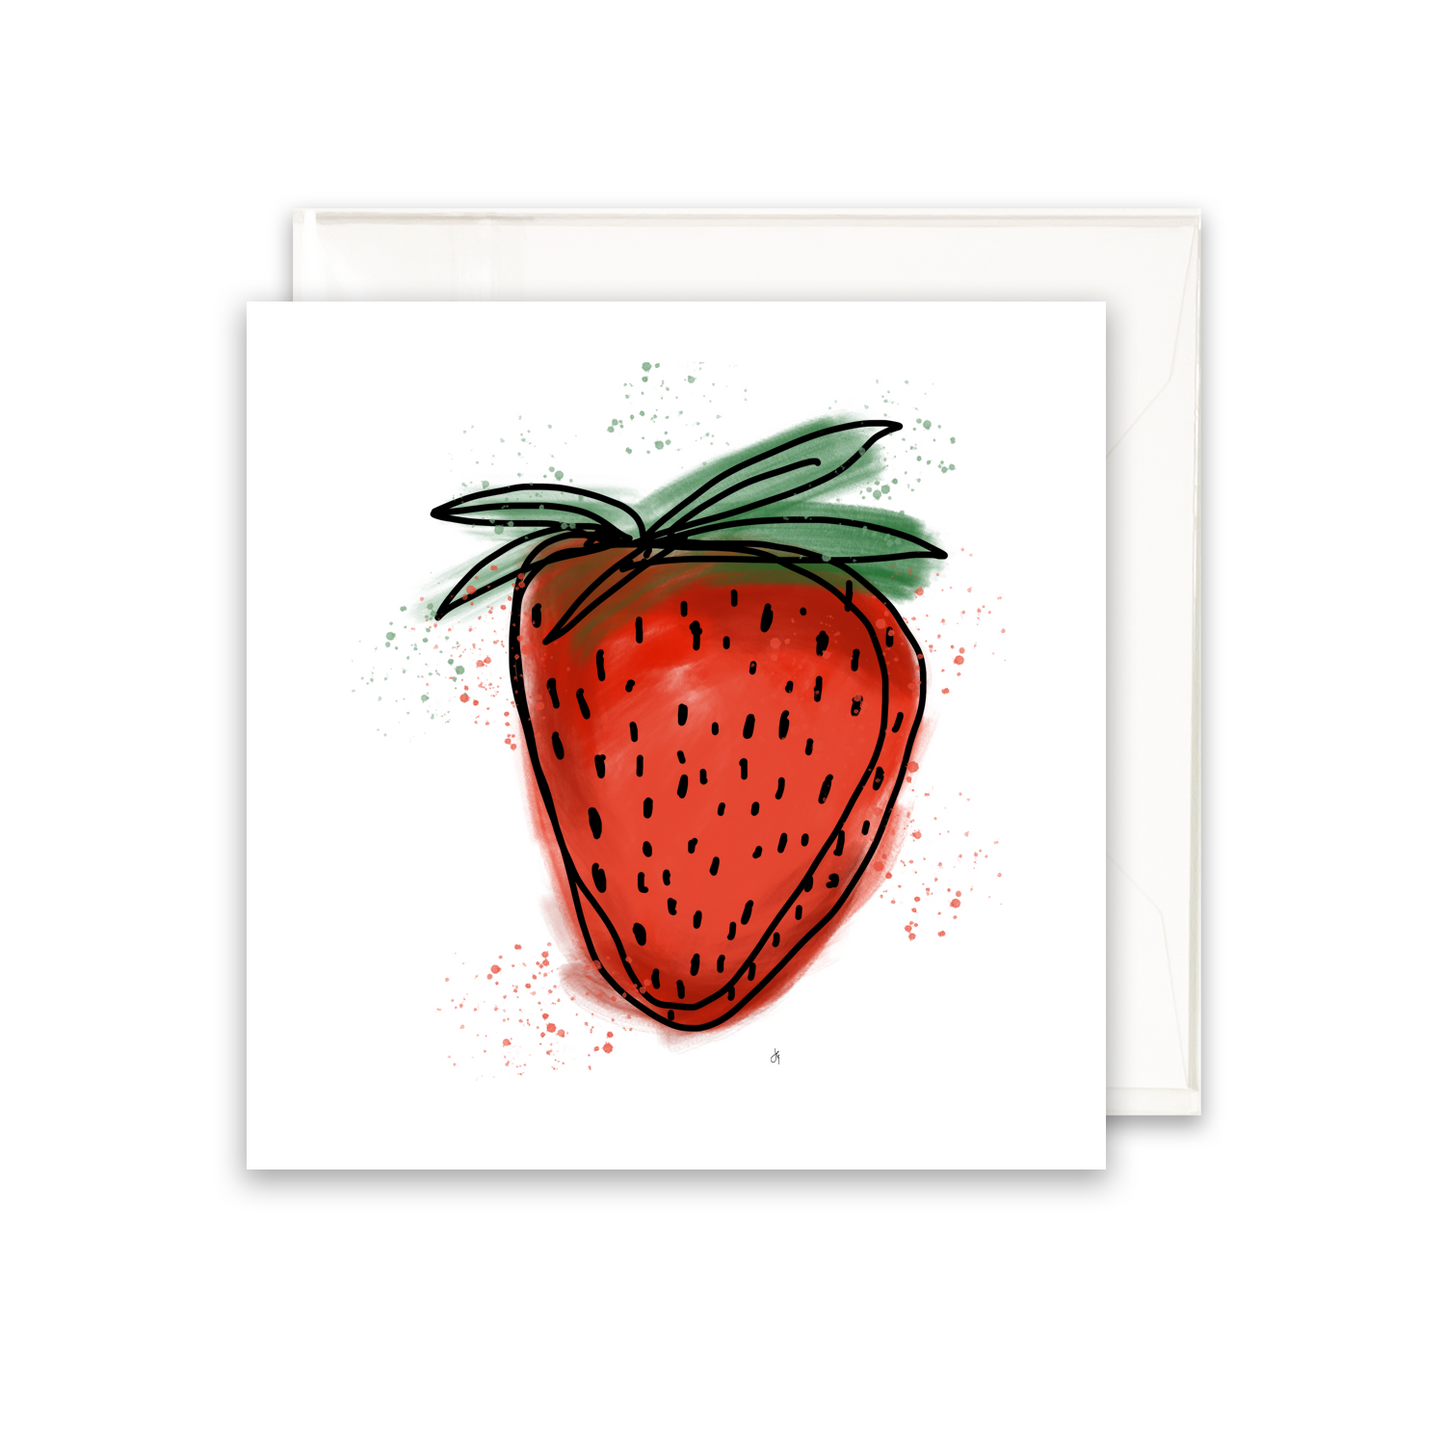 Strawberry Shortcake Enclosure Card - 2.75" x 2.75" Card